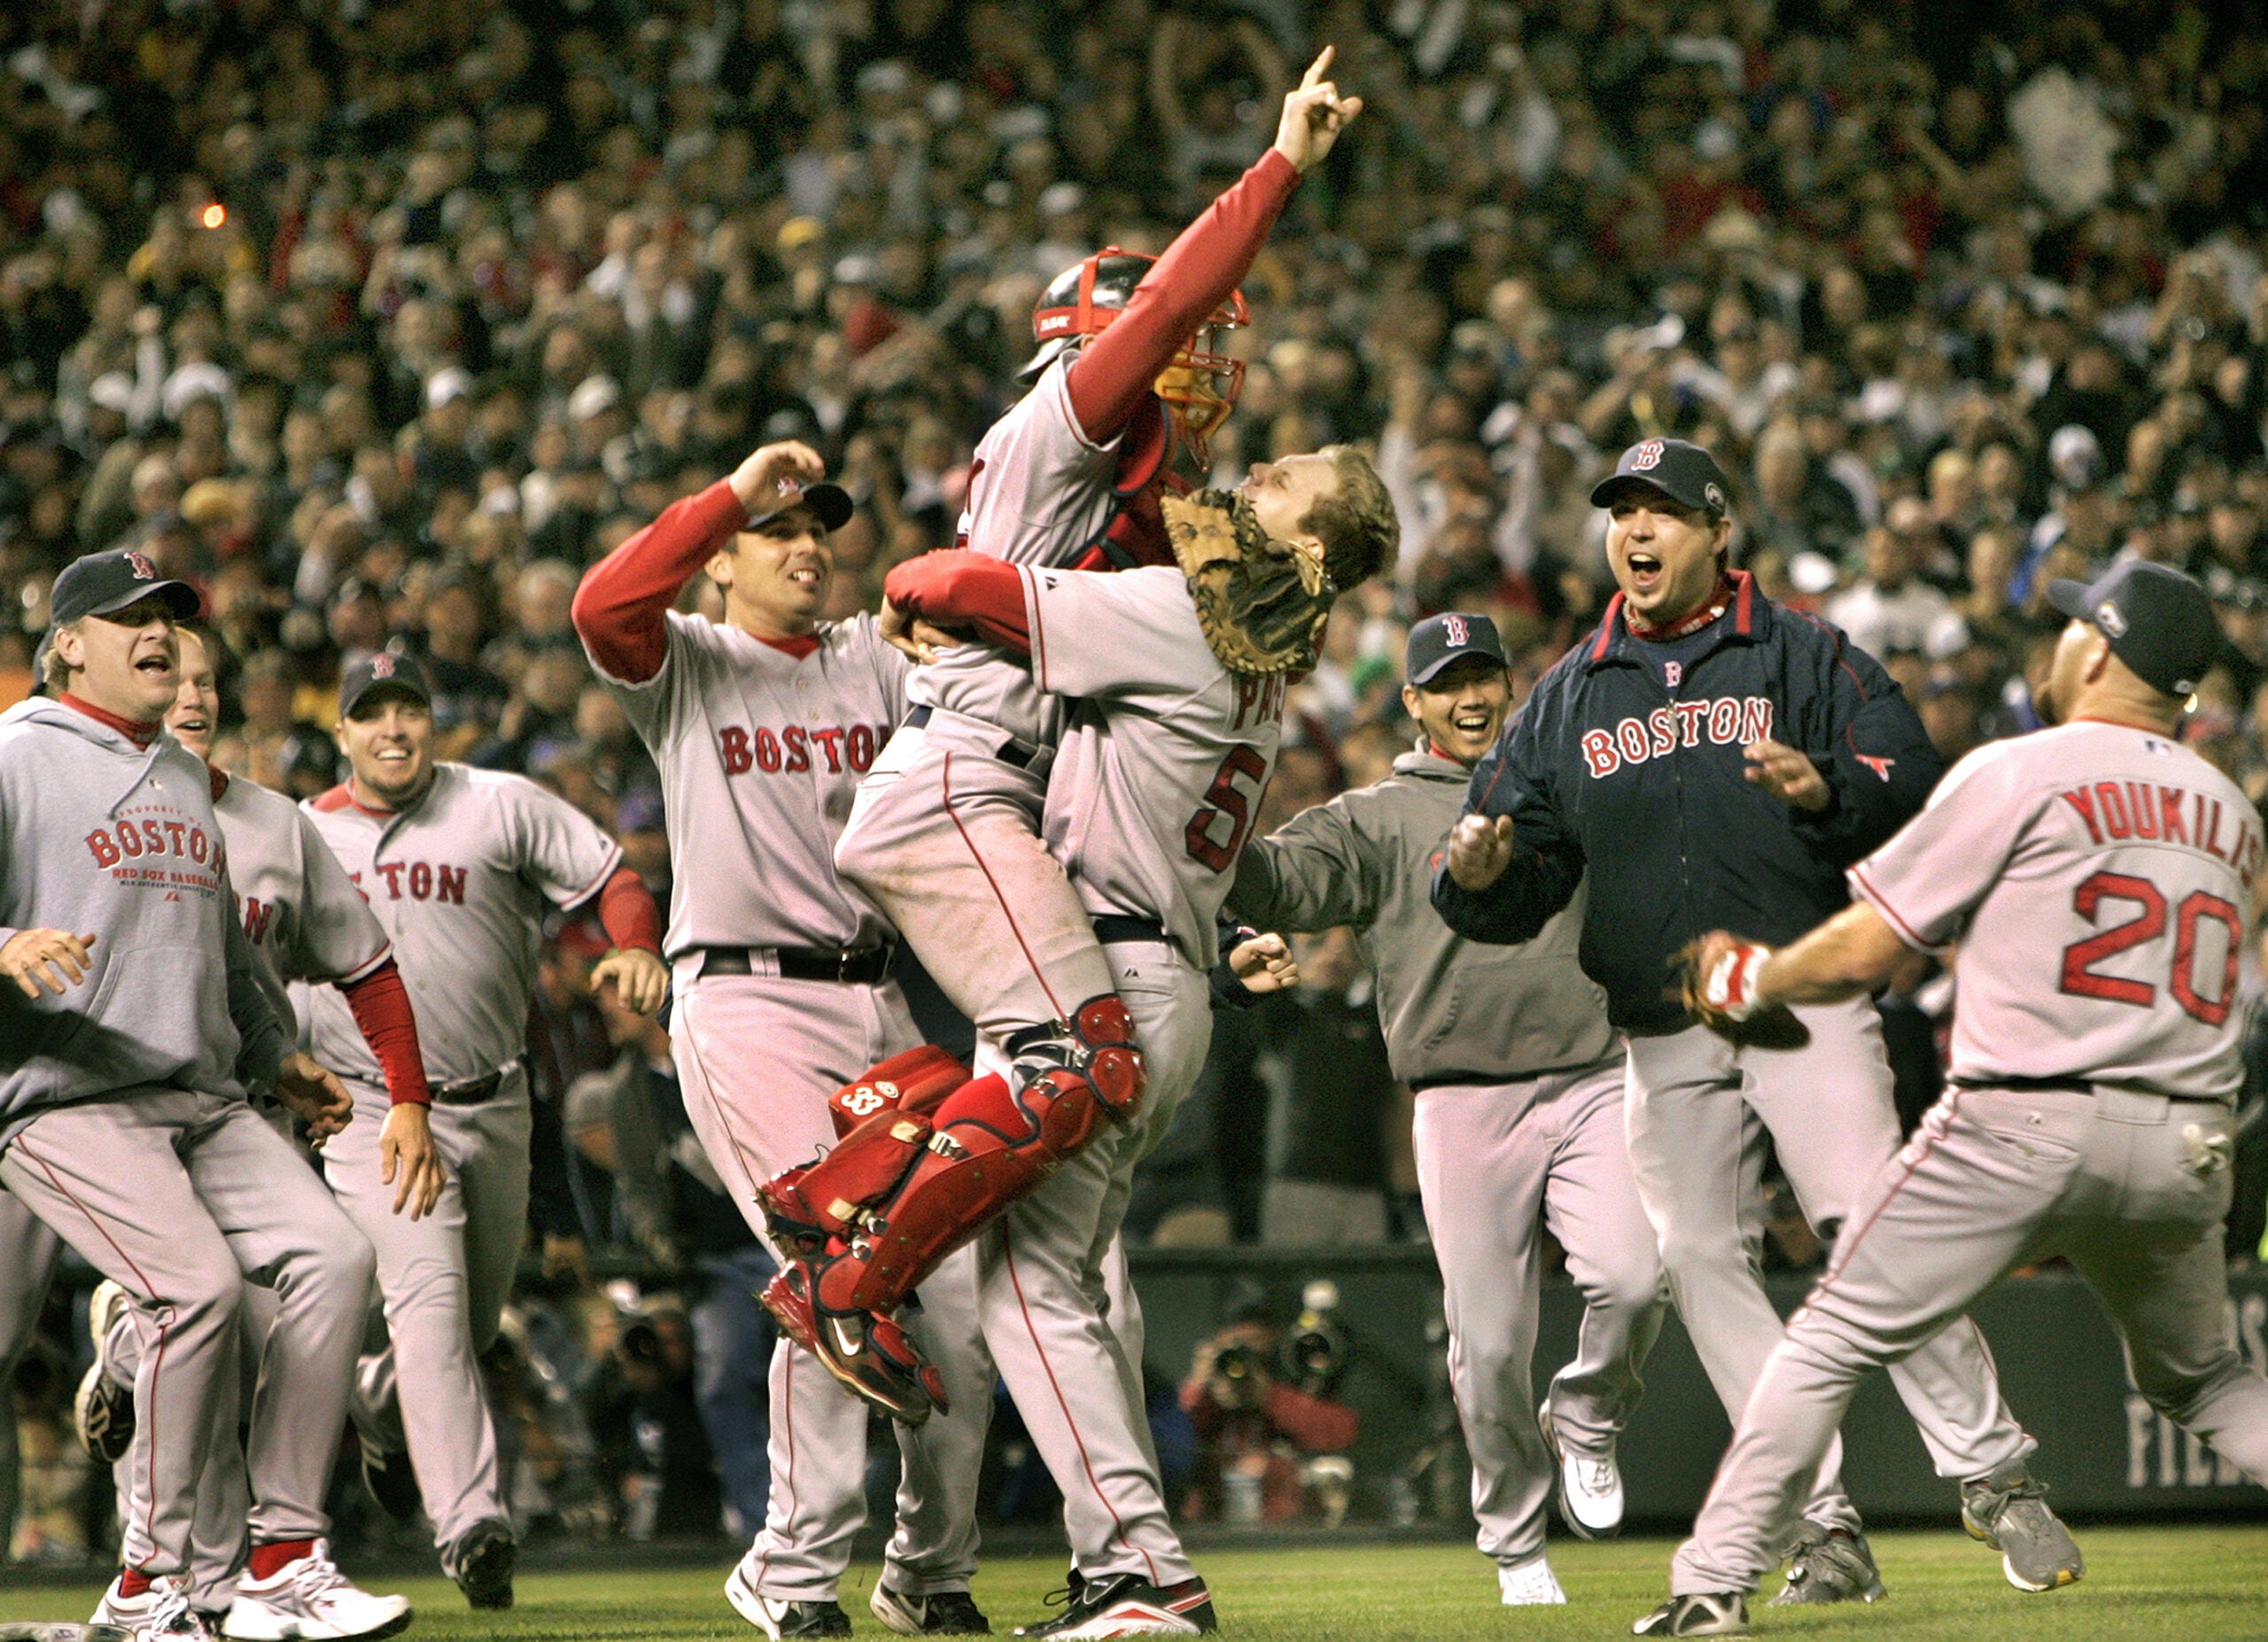 A look at the Red Sox' postseason history